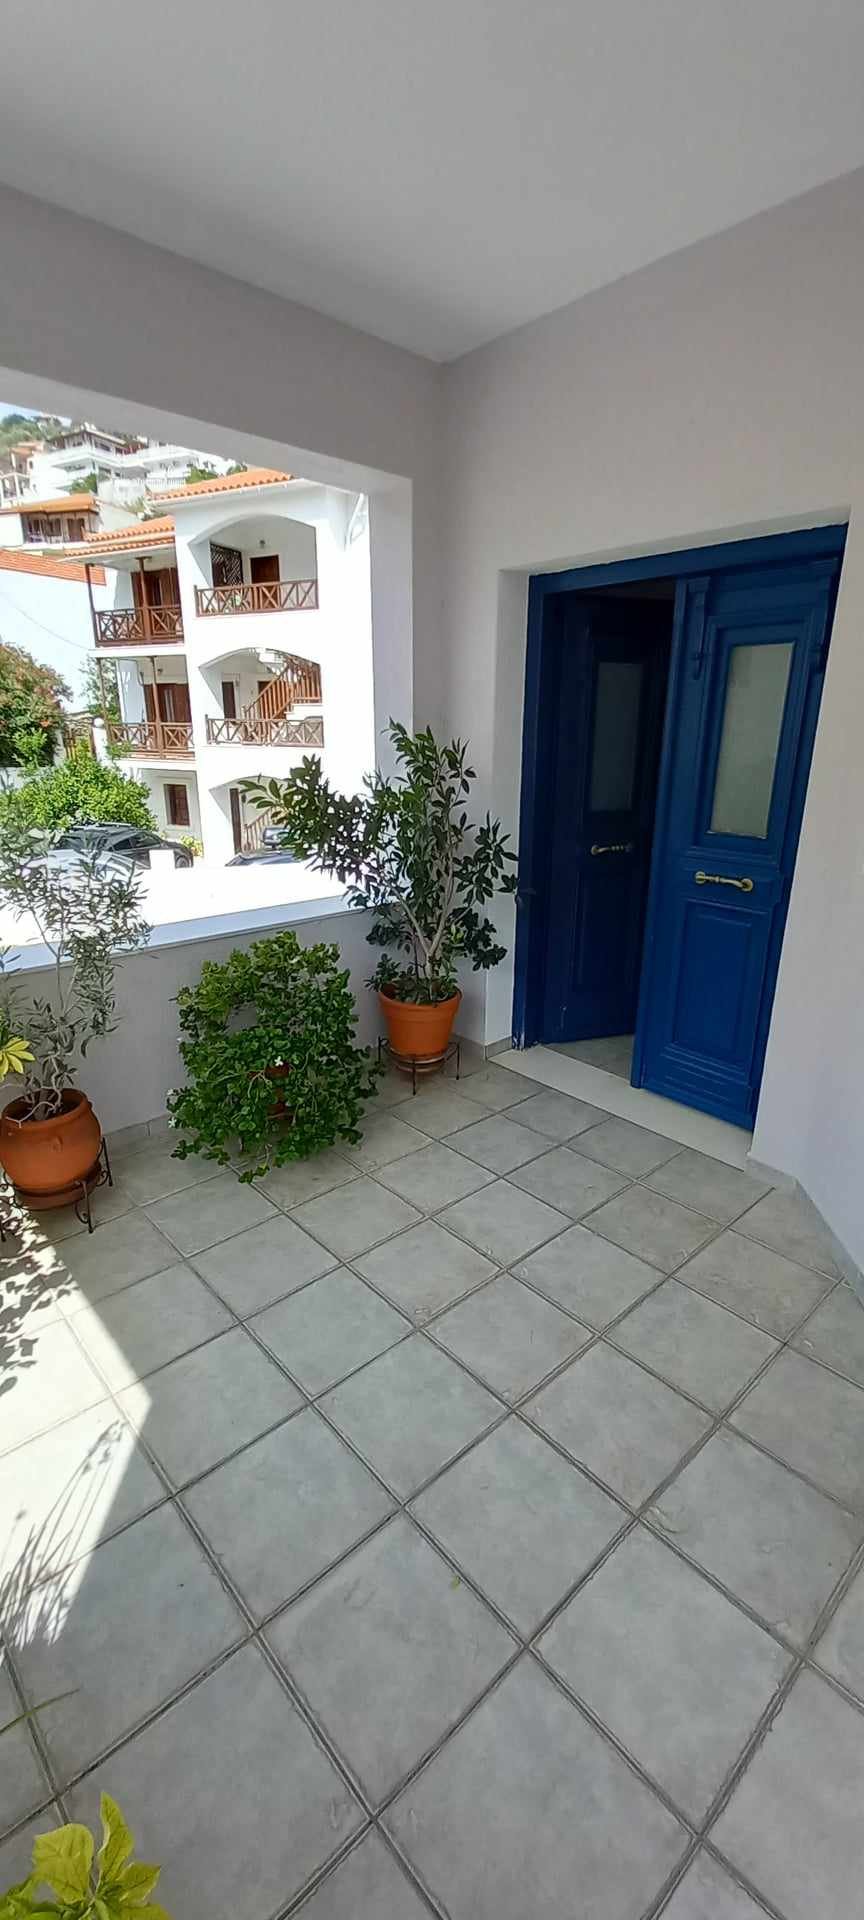 unique_spacious_modern_home_tiles_blue_door.jpg